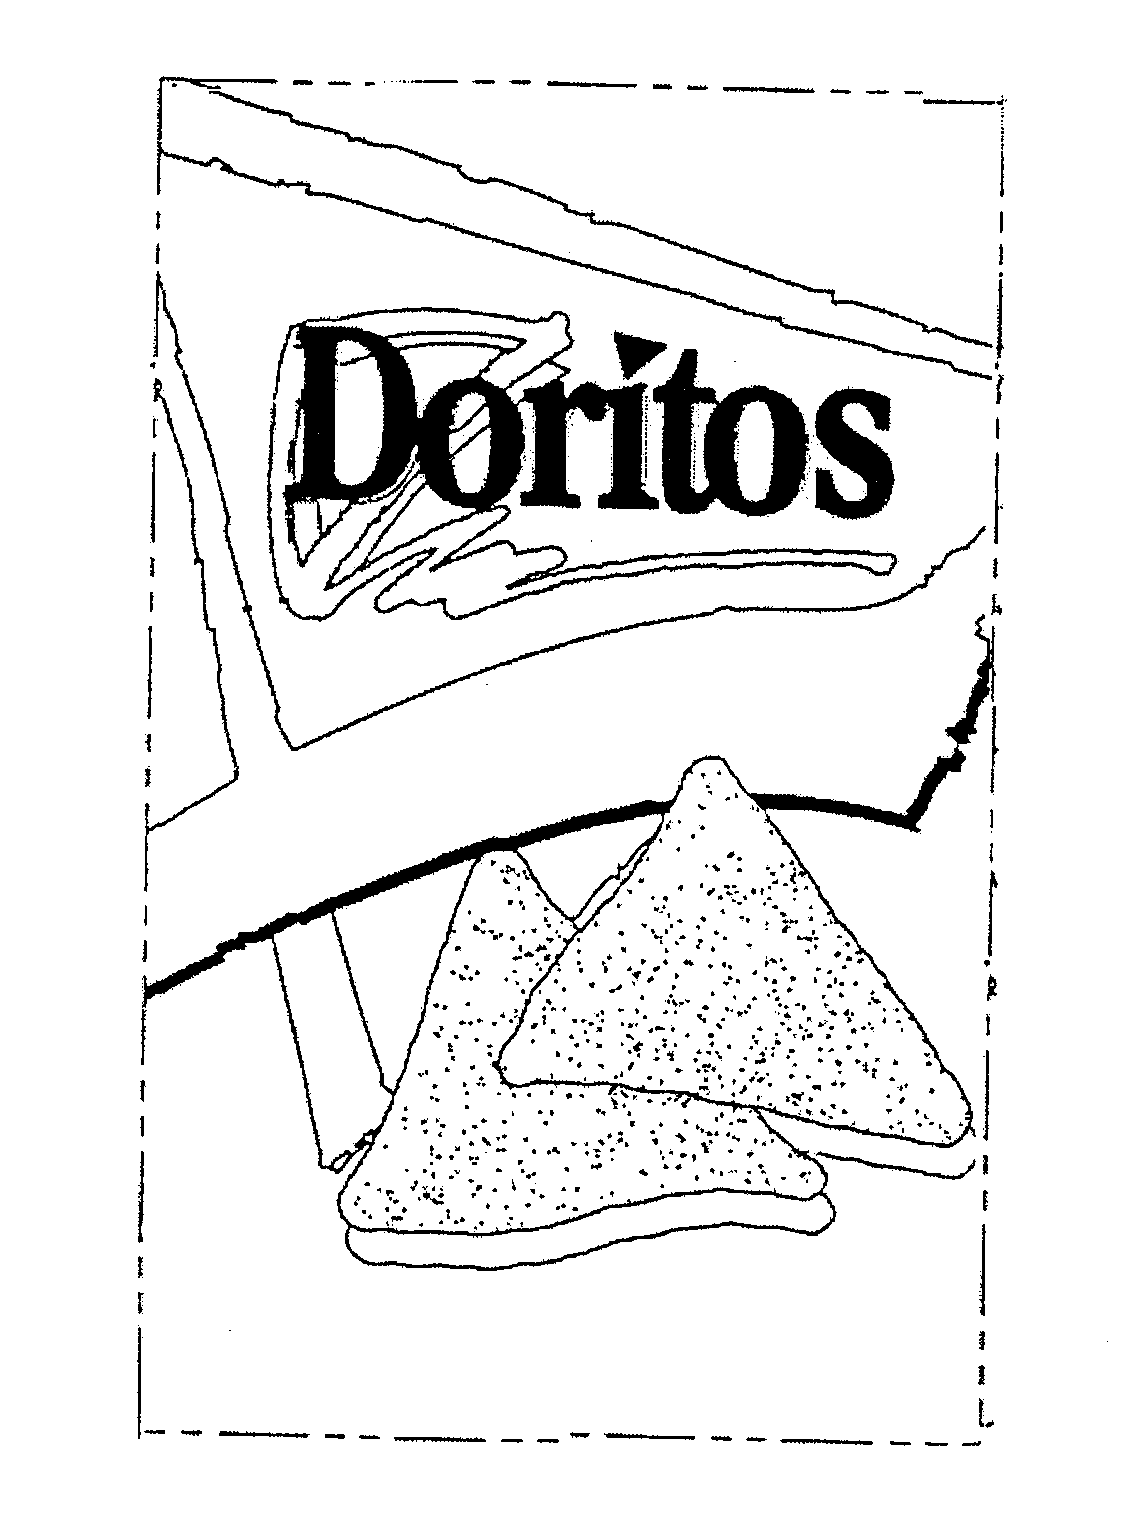 DORITOS - Frito-lay North America, Inc. Trademark Registration